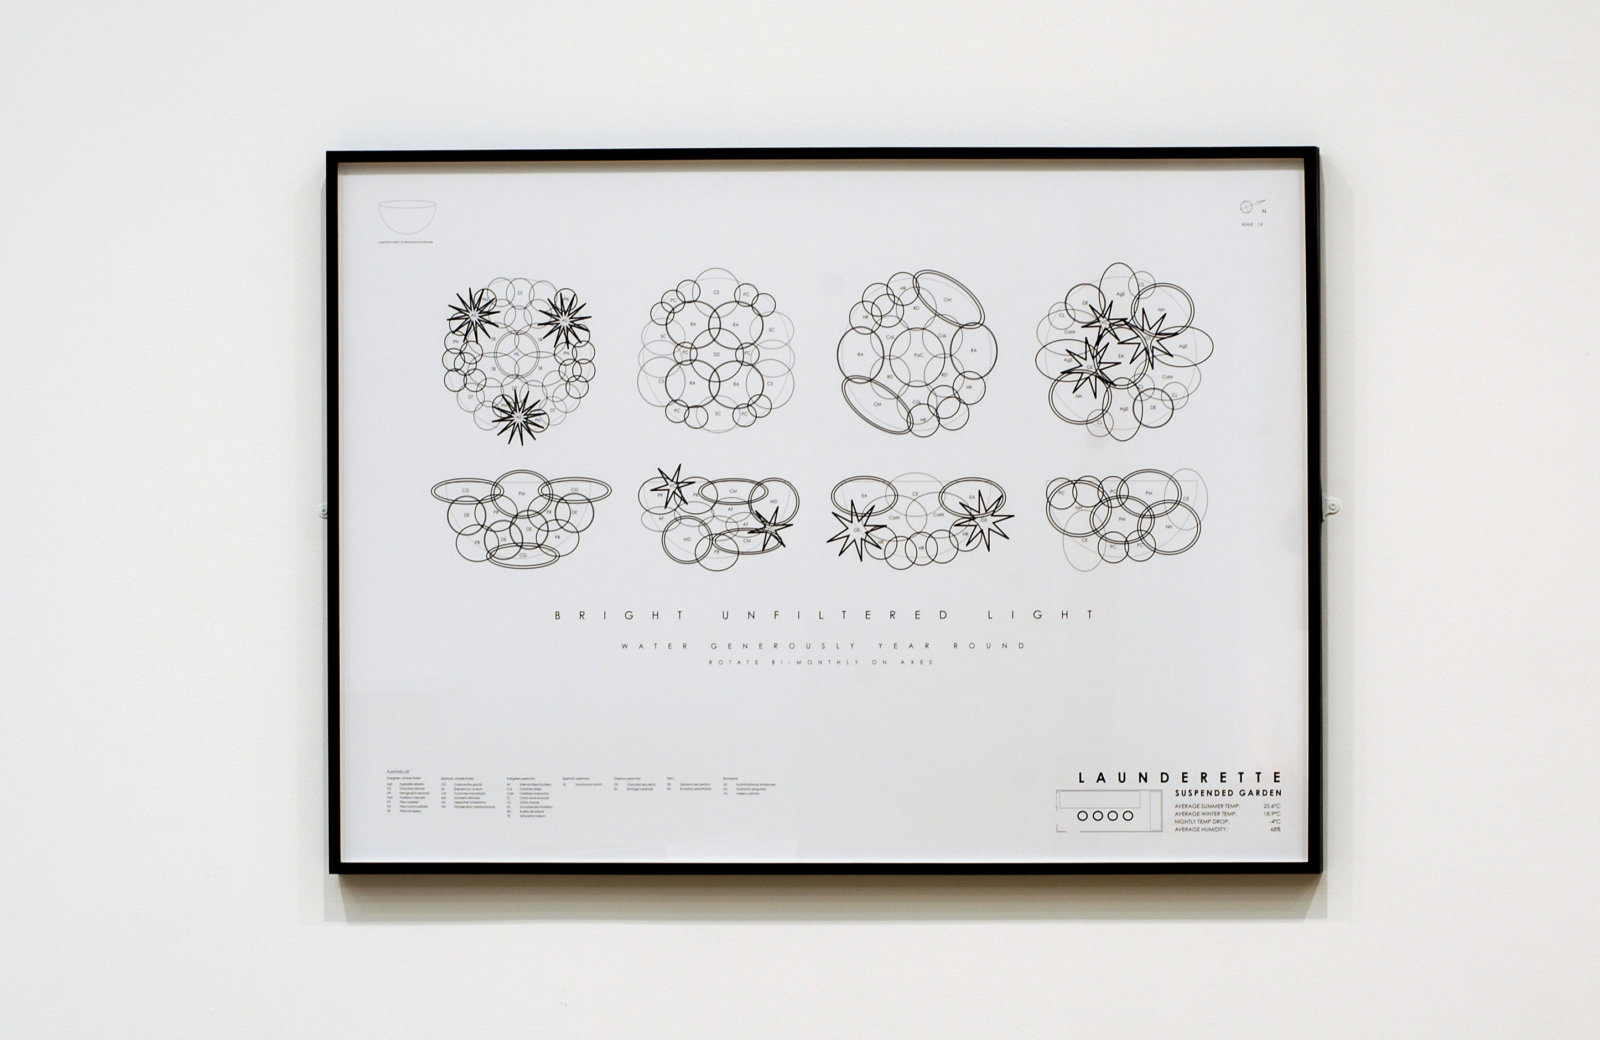 Janice Kerbel, Home Climate Gardens: Launderette, 2003, digital inkjet print on double weight matte paper, 33 x 47 in. (84 x 119 cm)